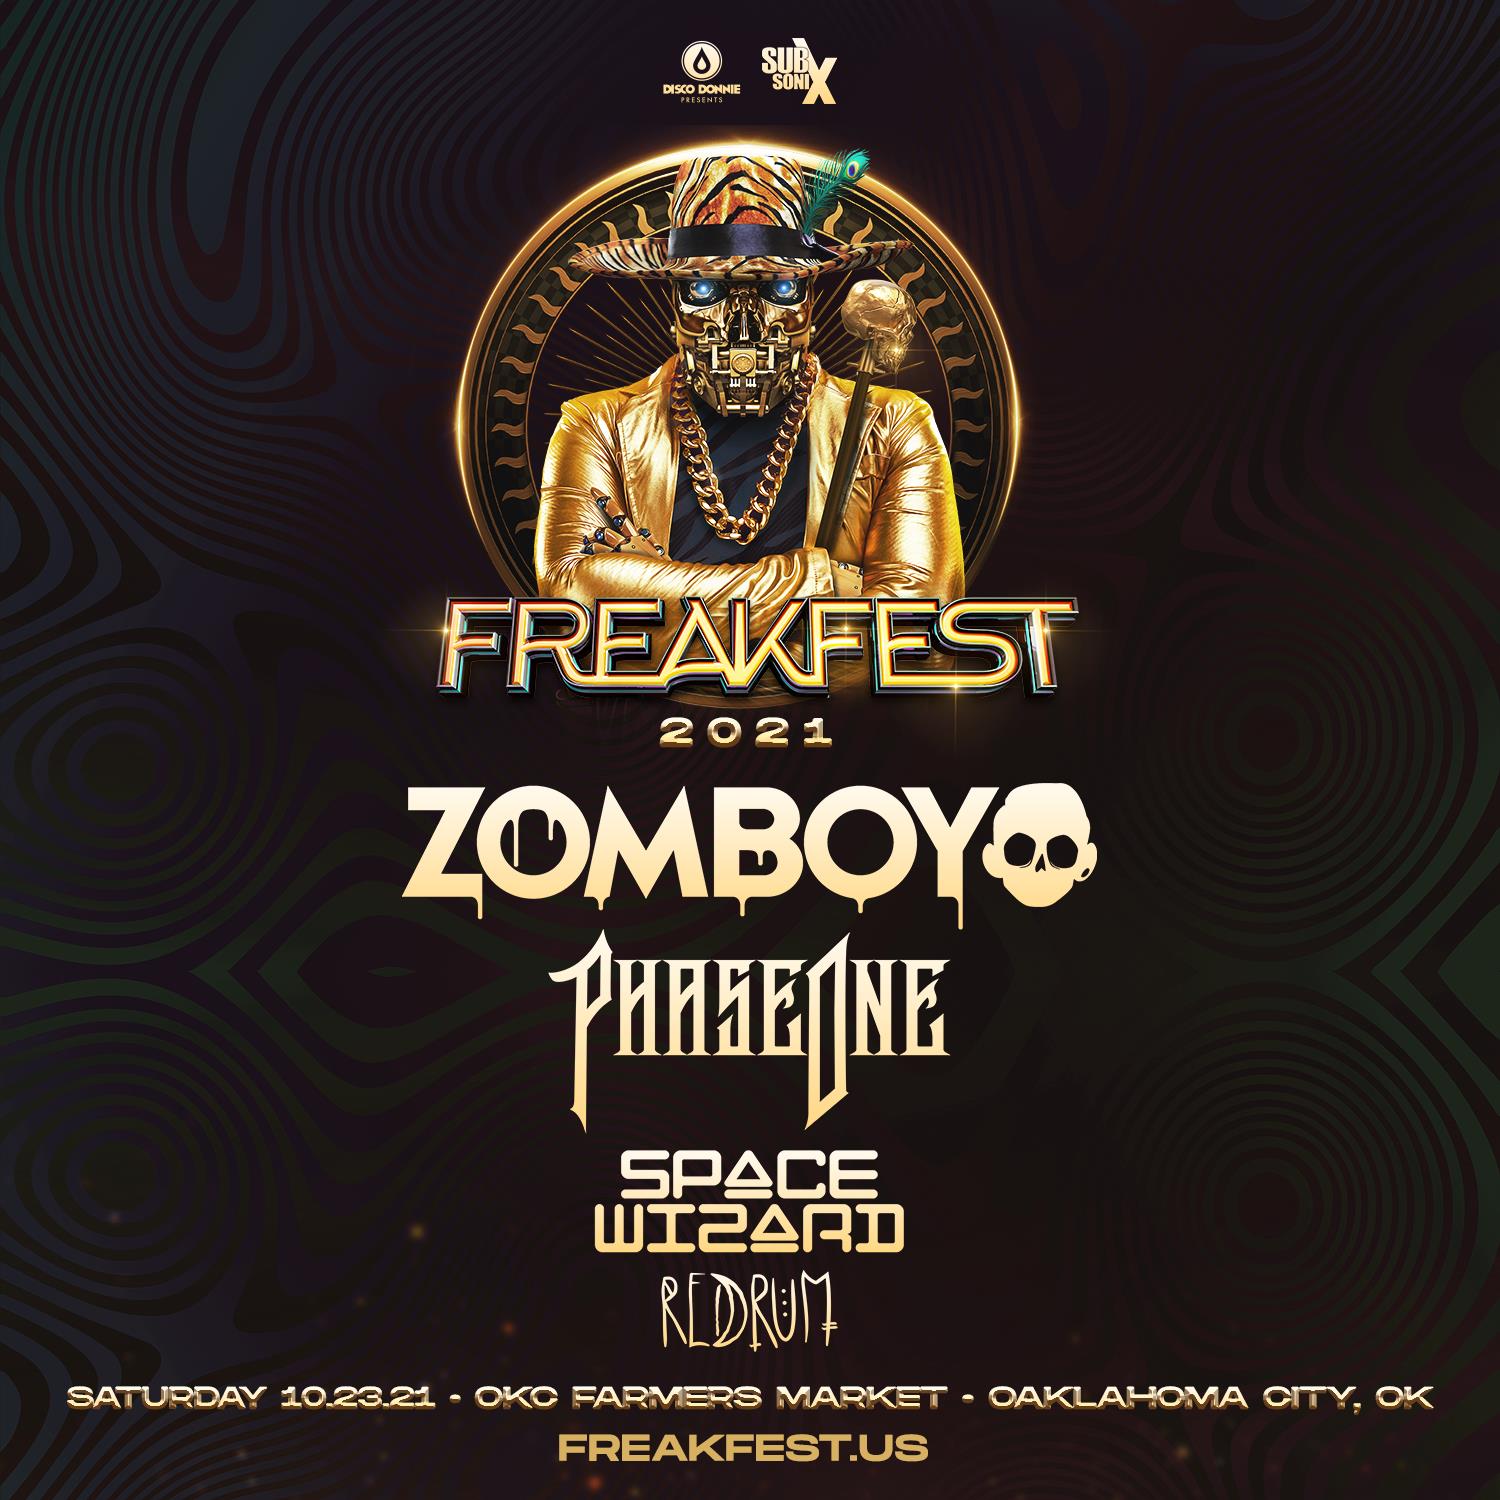 Buy Tickets to Freakfest Ft. Zomboy OKC in Oklahoma City on Oct 23, 2021